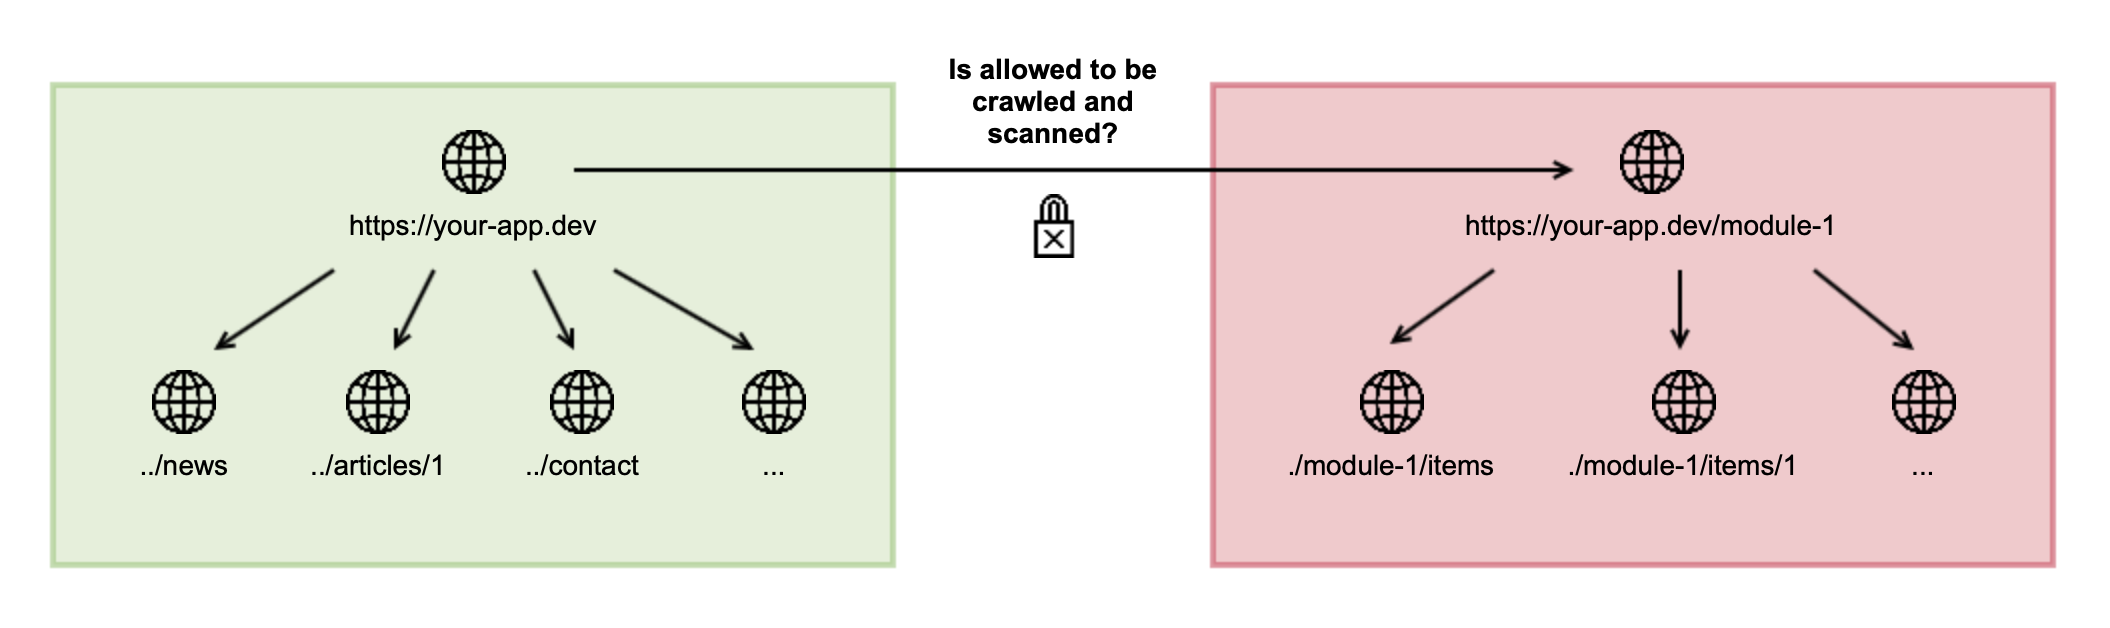 How-do-the-allowed-URLs work-Denied-Crashtest-Security